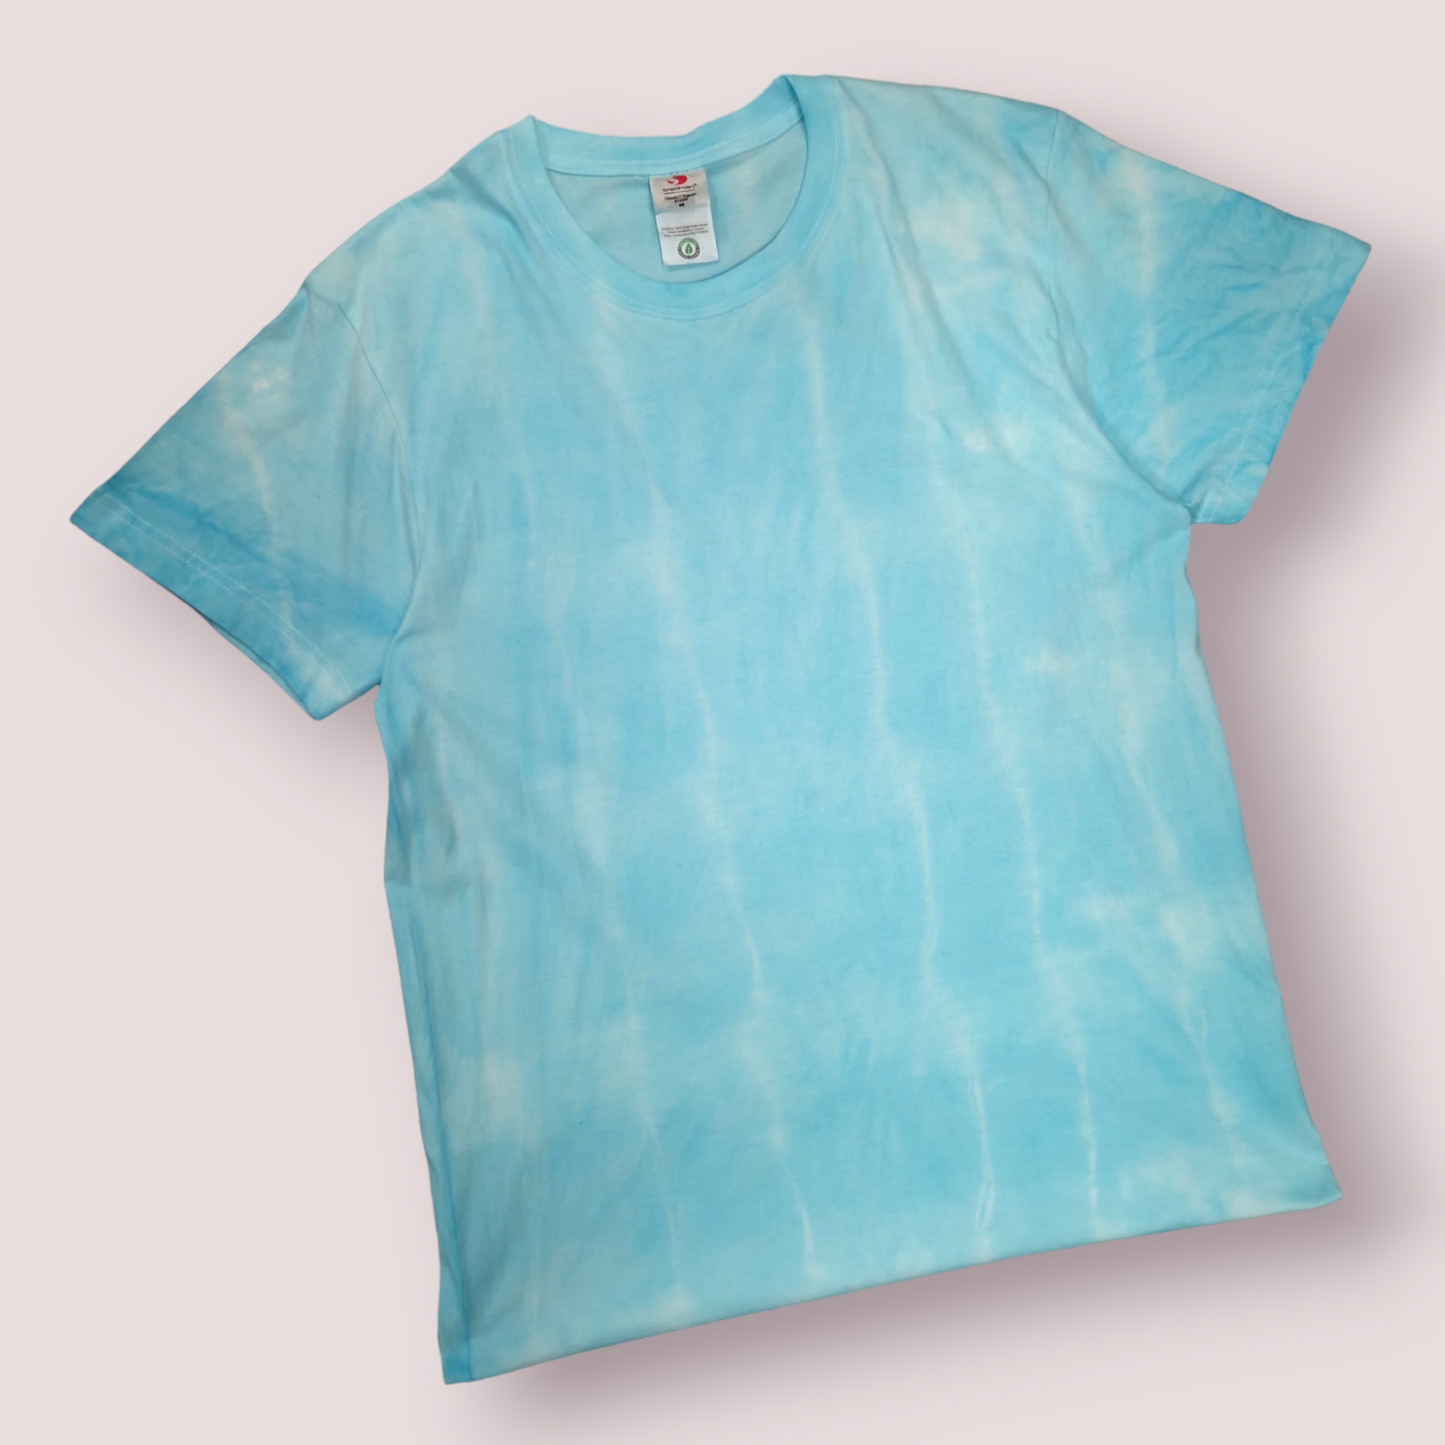 Tie Dye T-Shirt - Adult M - Aqua Blue